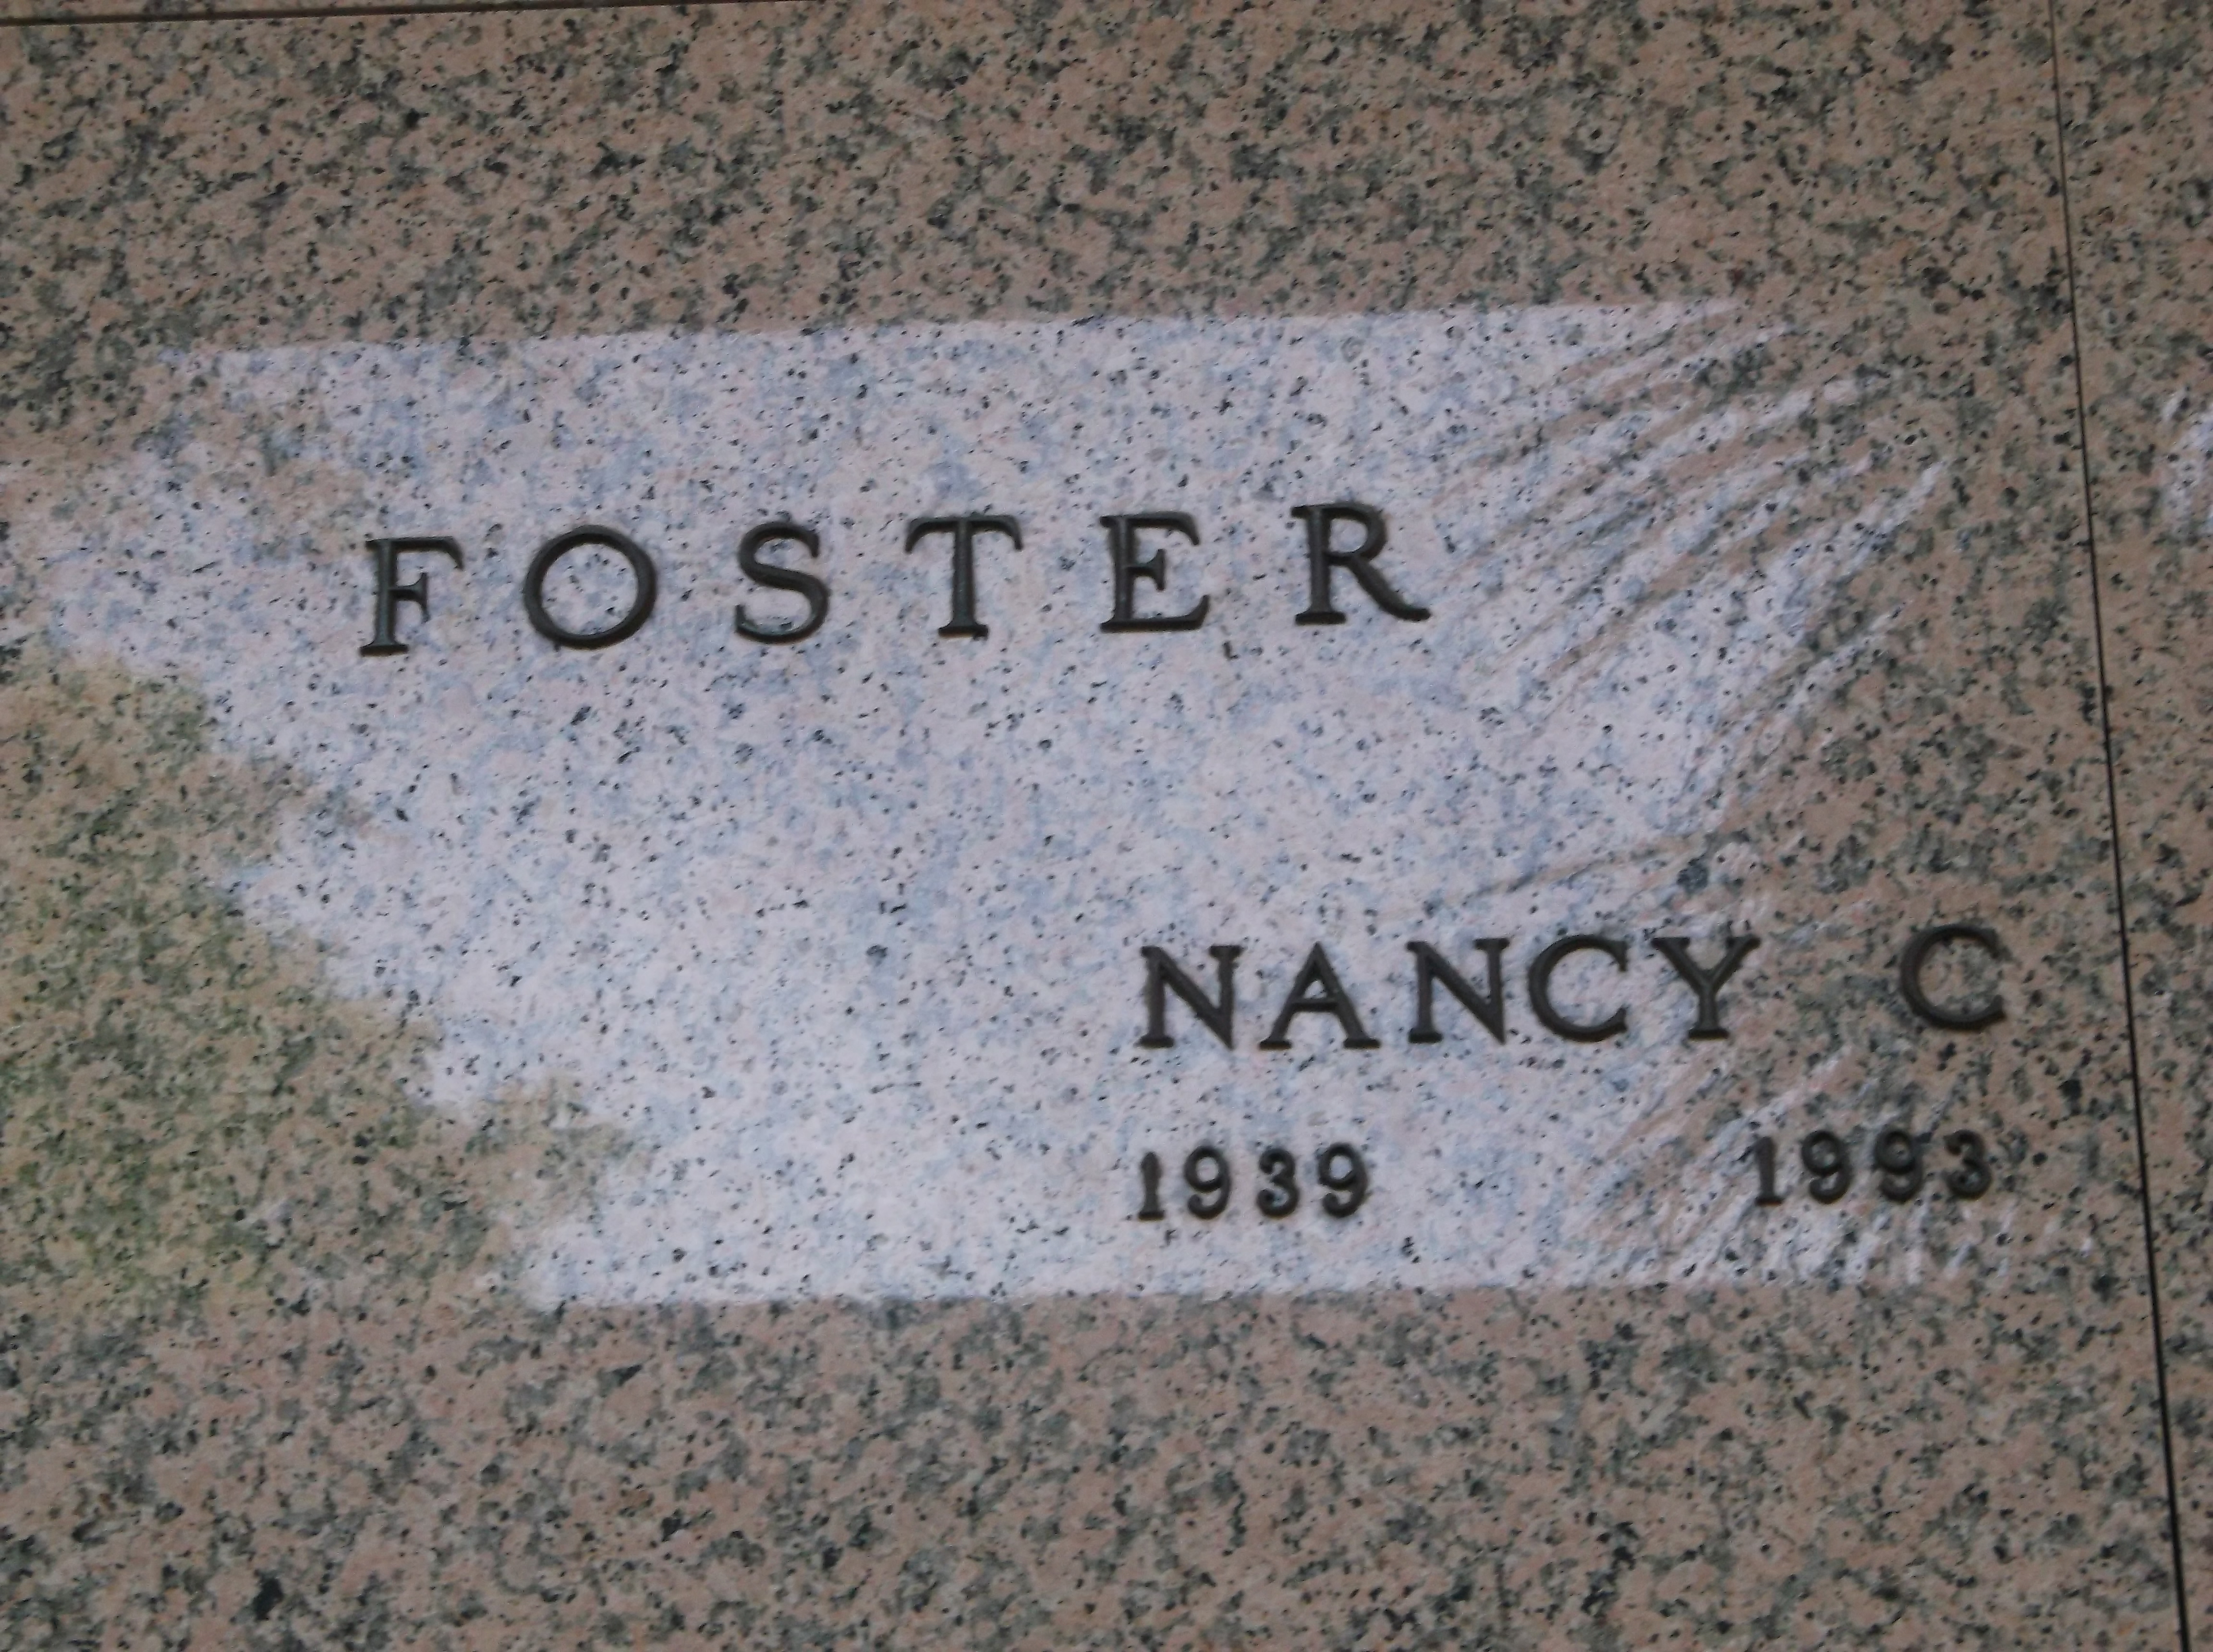 Nancy C Foster